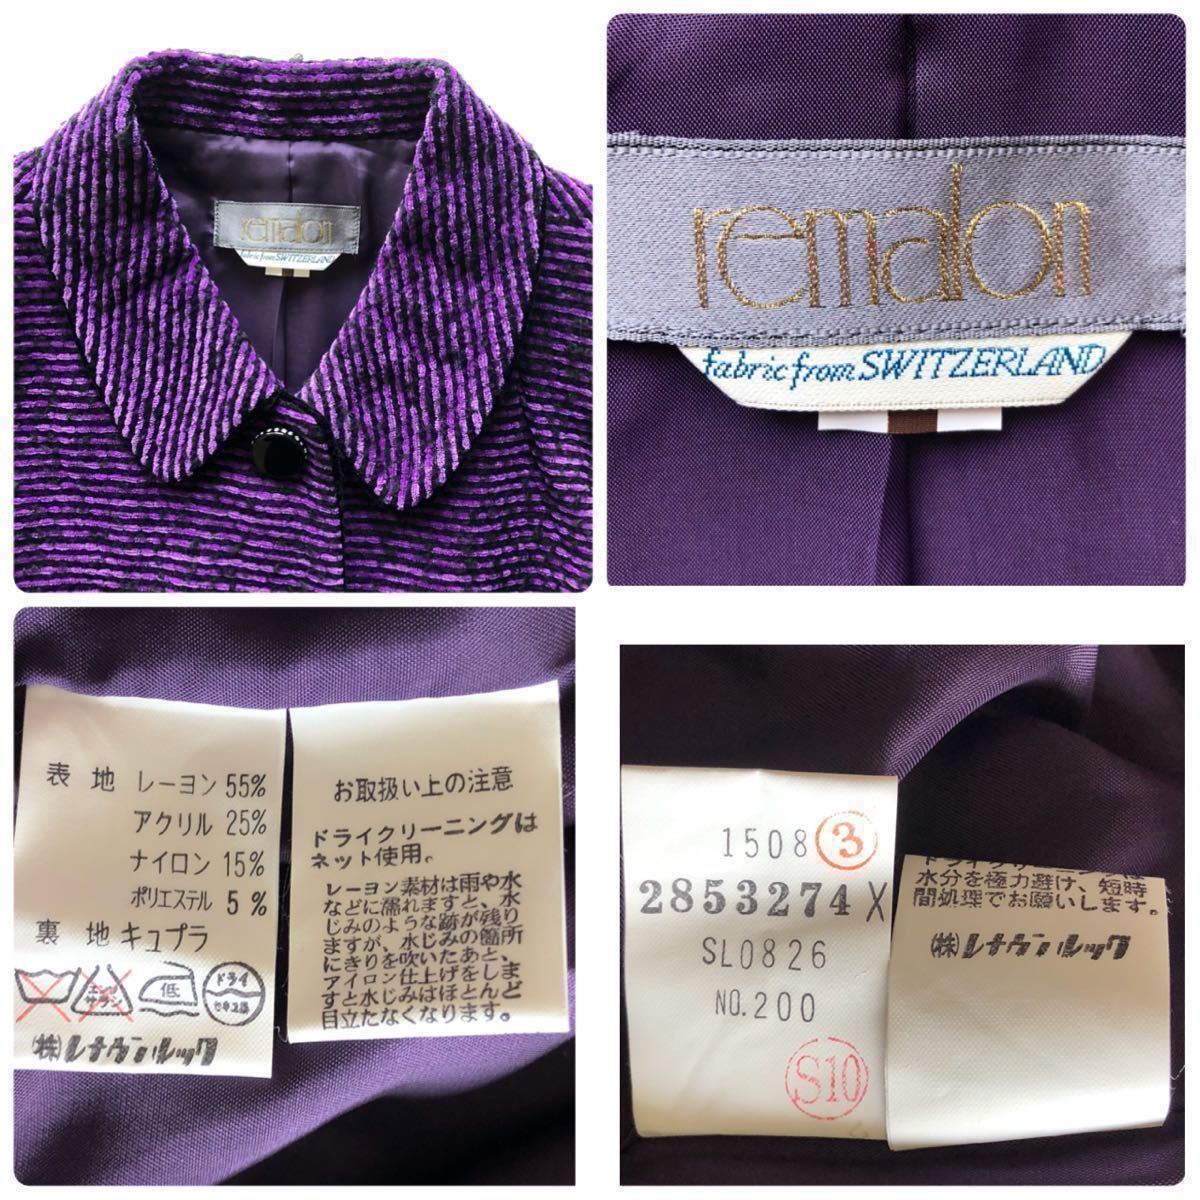  high class remalonrema ronsui s made cloth setup suit jacket skirt formal large size 13 number LL XL purple Vintage purple black 